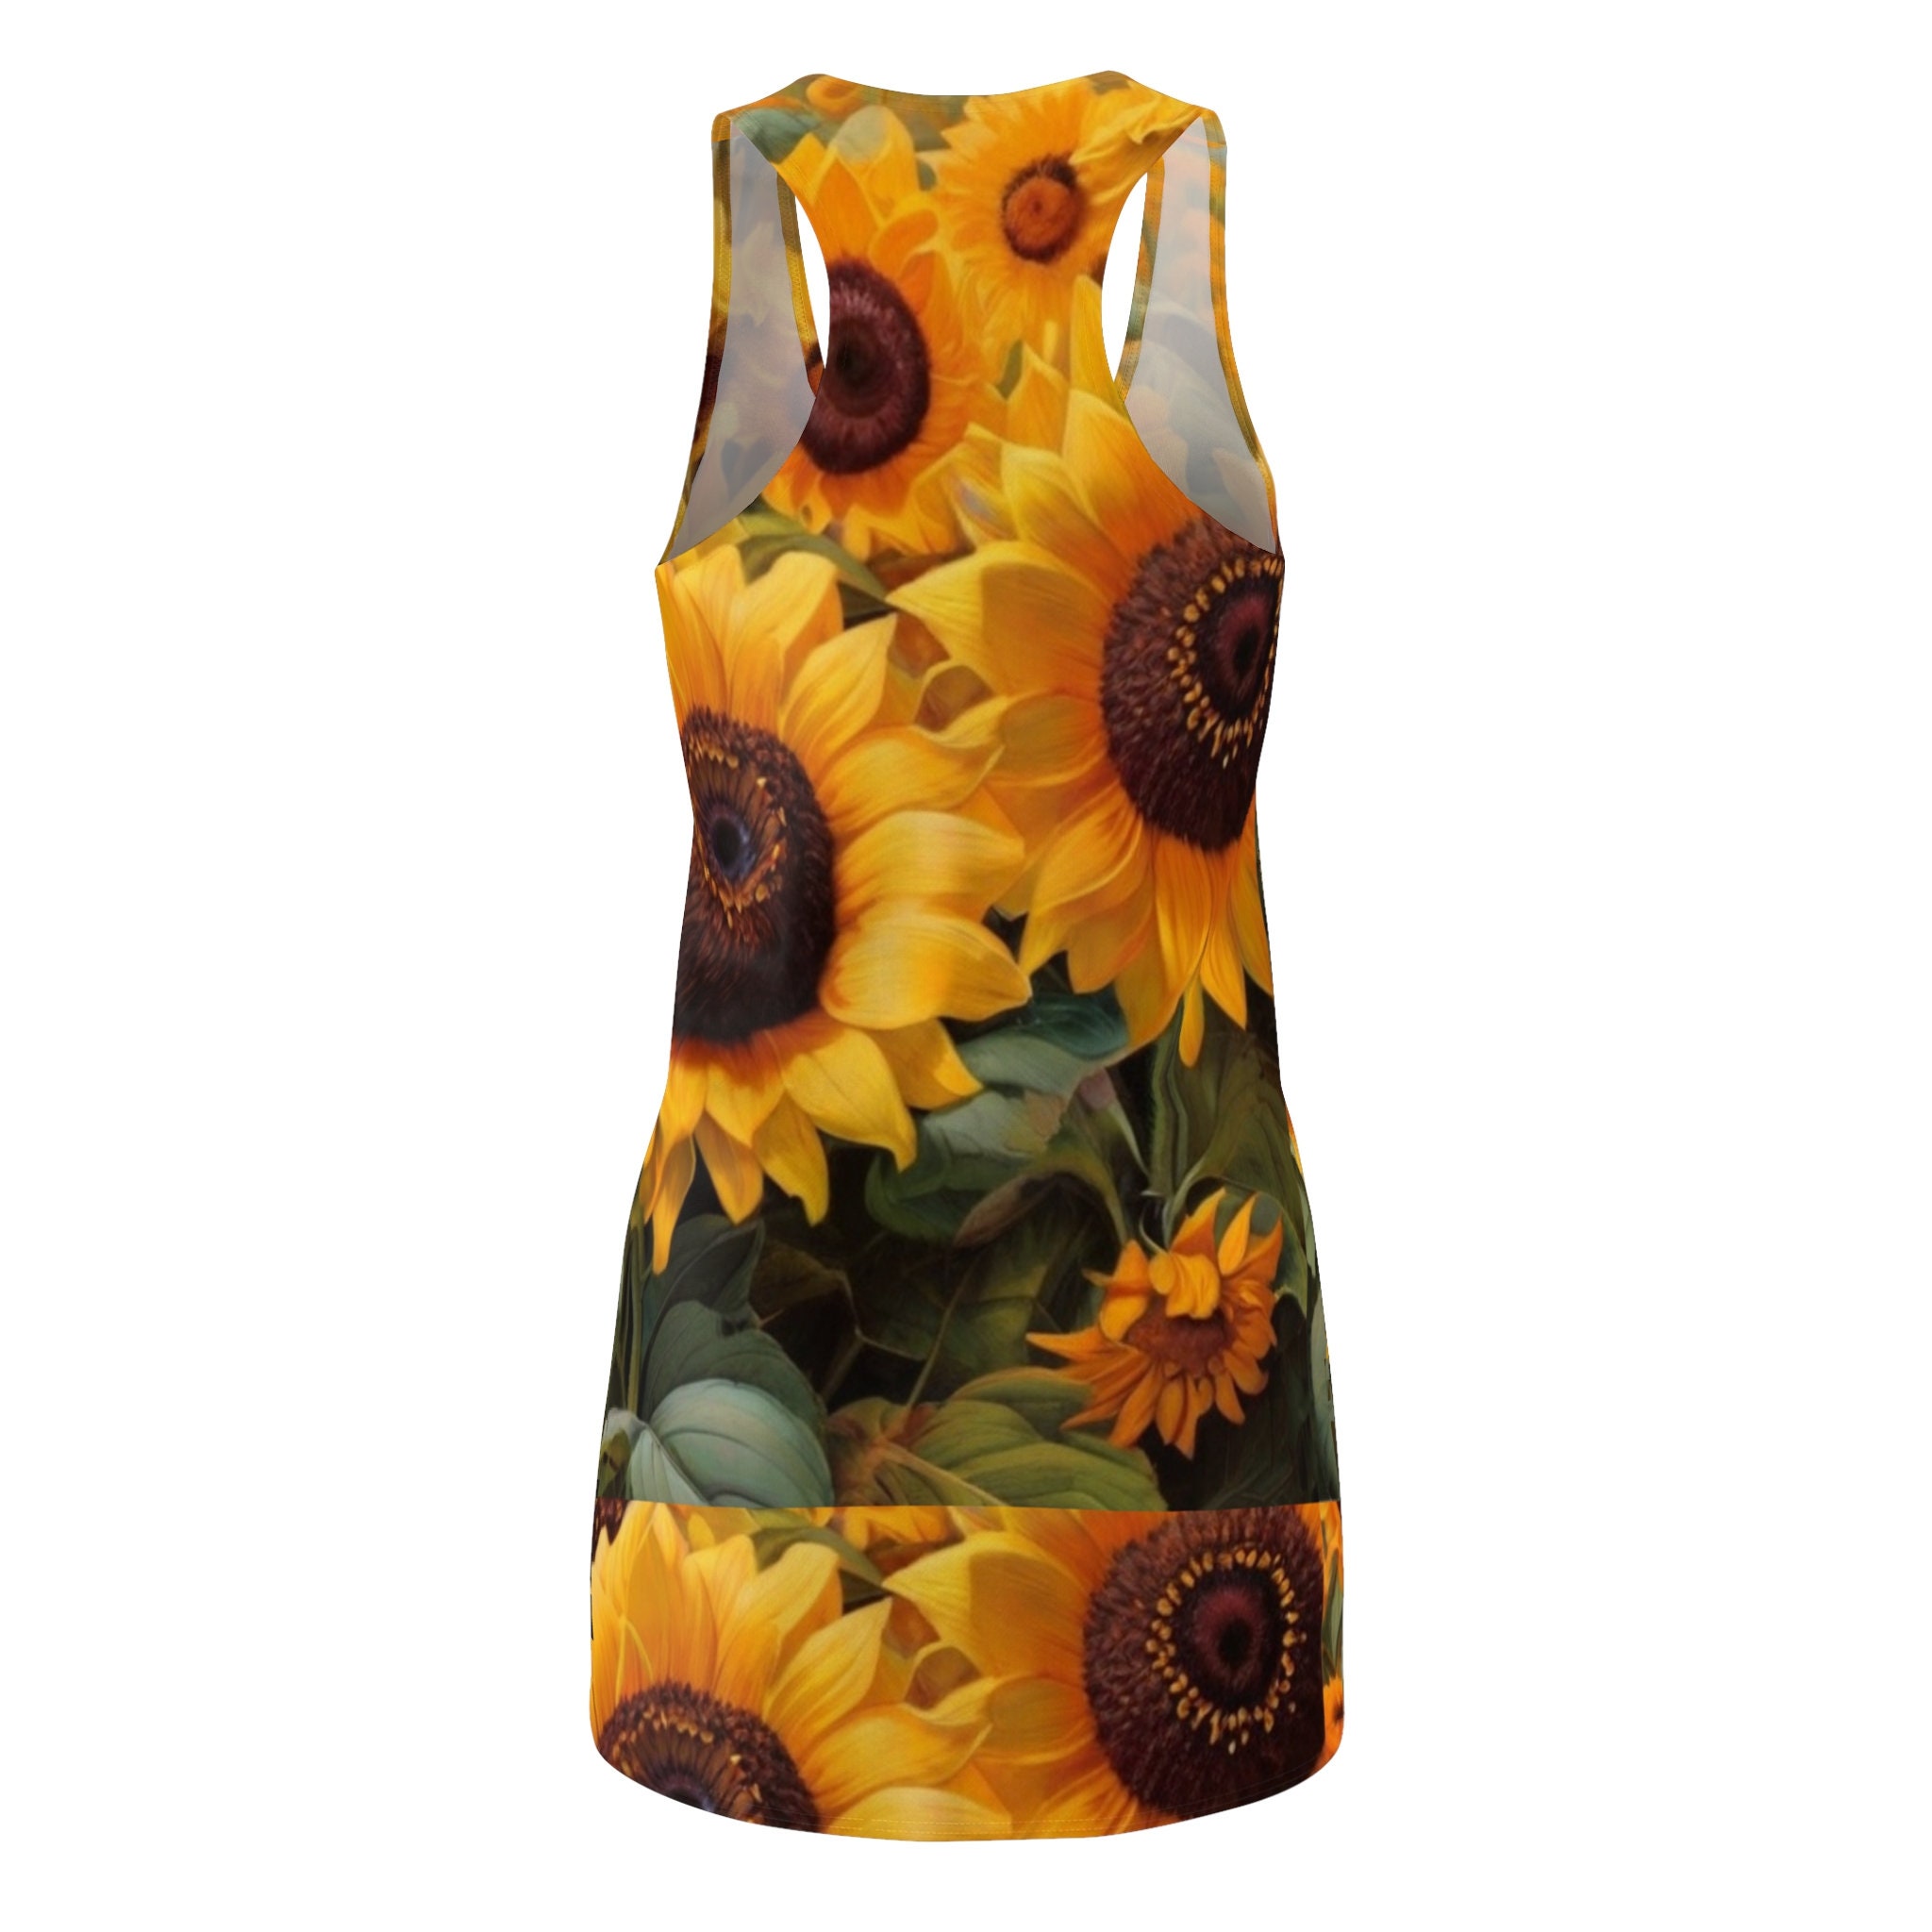 Sunflower Women's Cut & Sew Racerback Dress